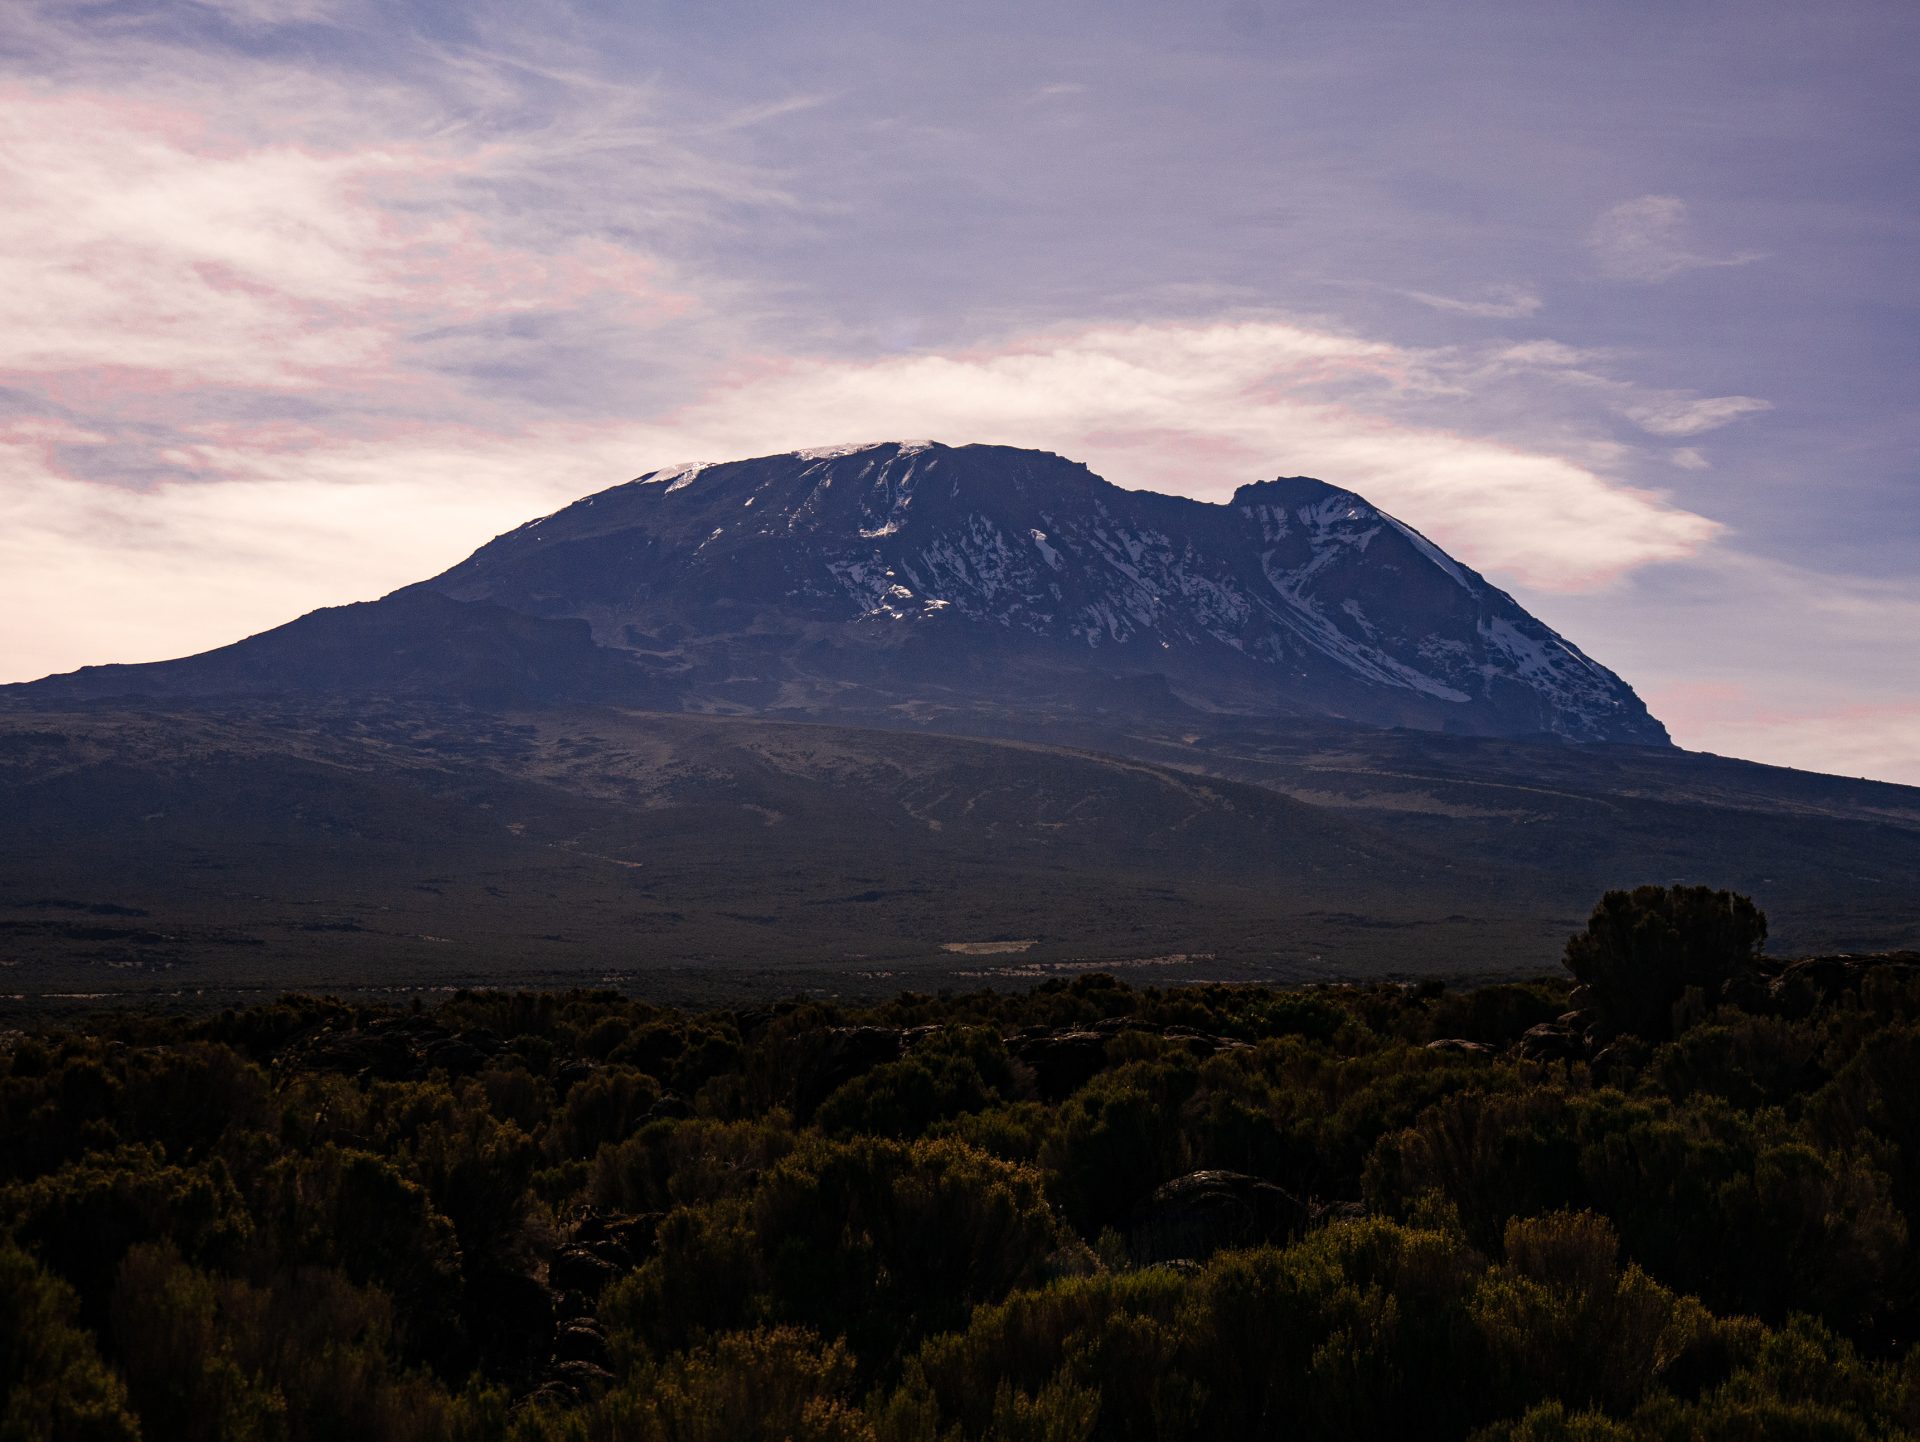 Kilimanjaro on the skyline